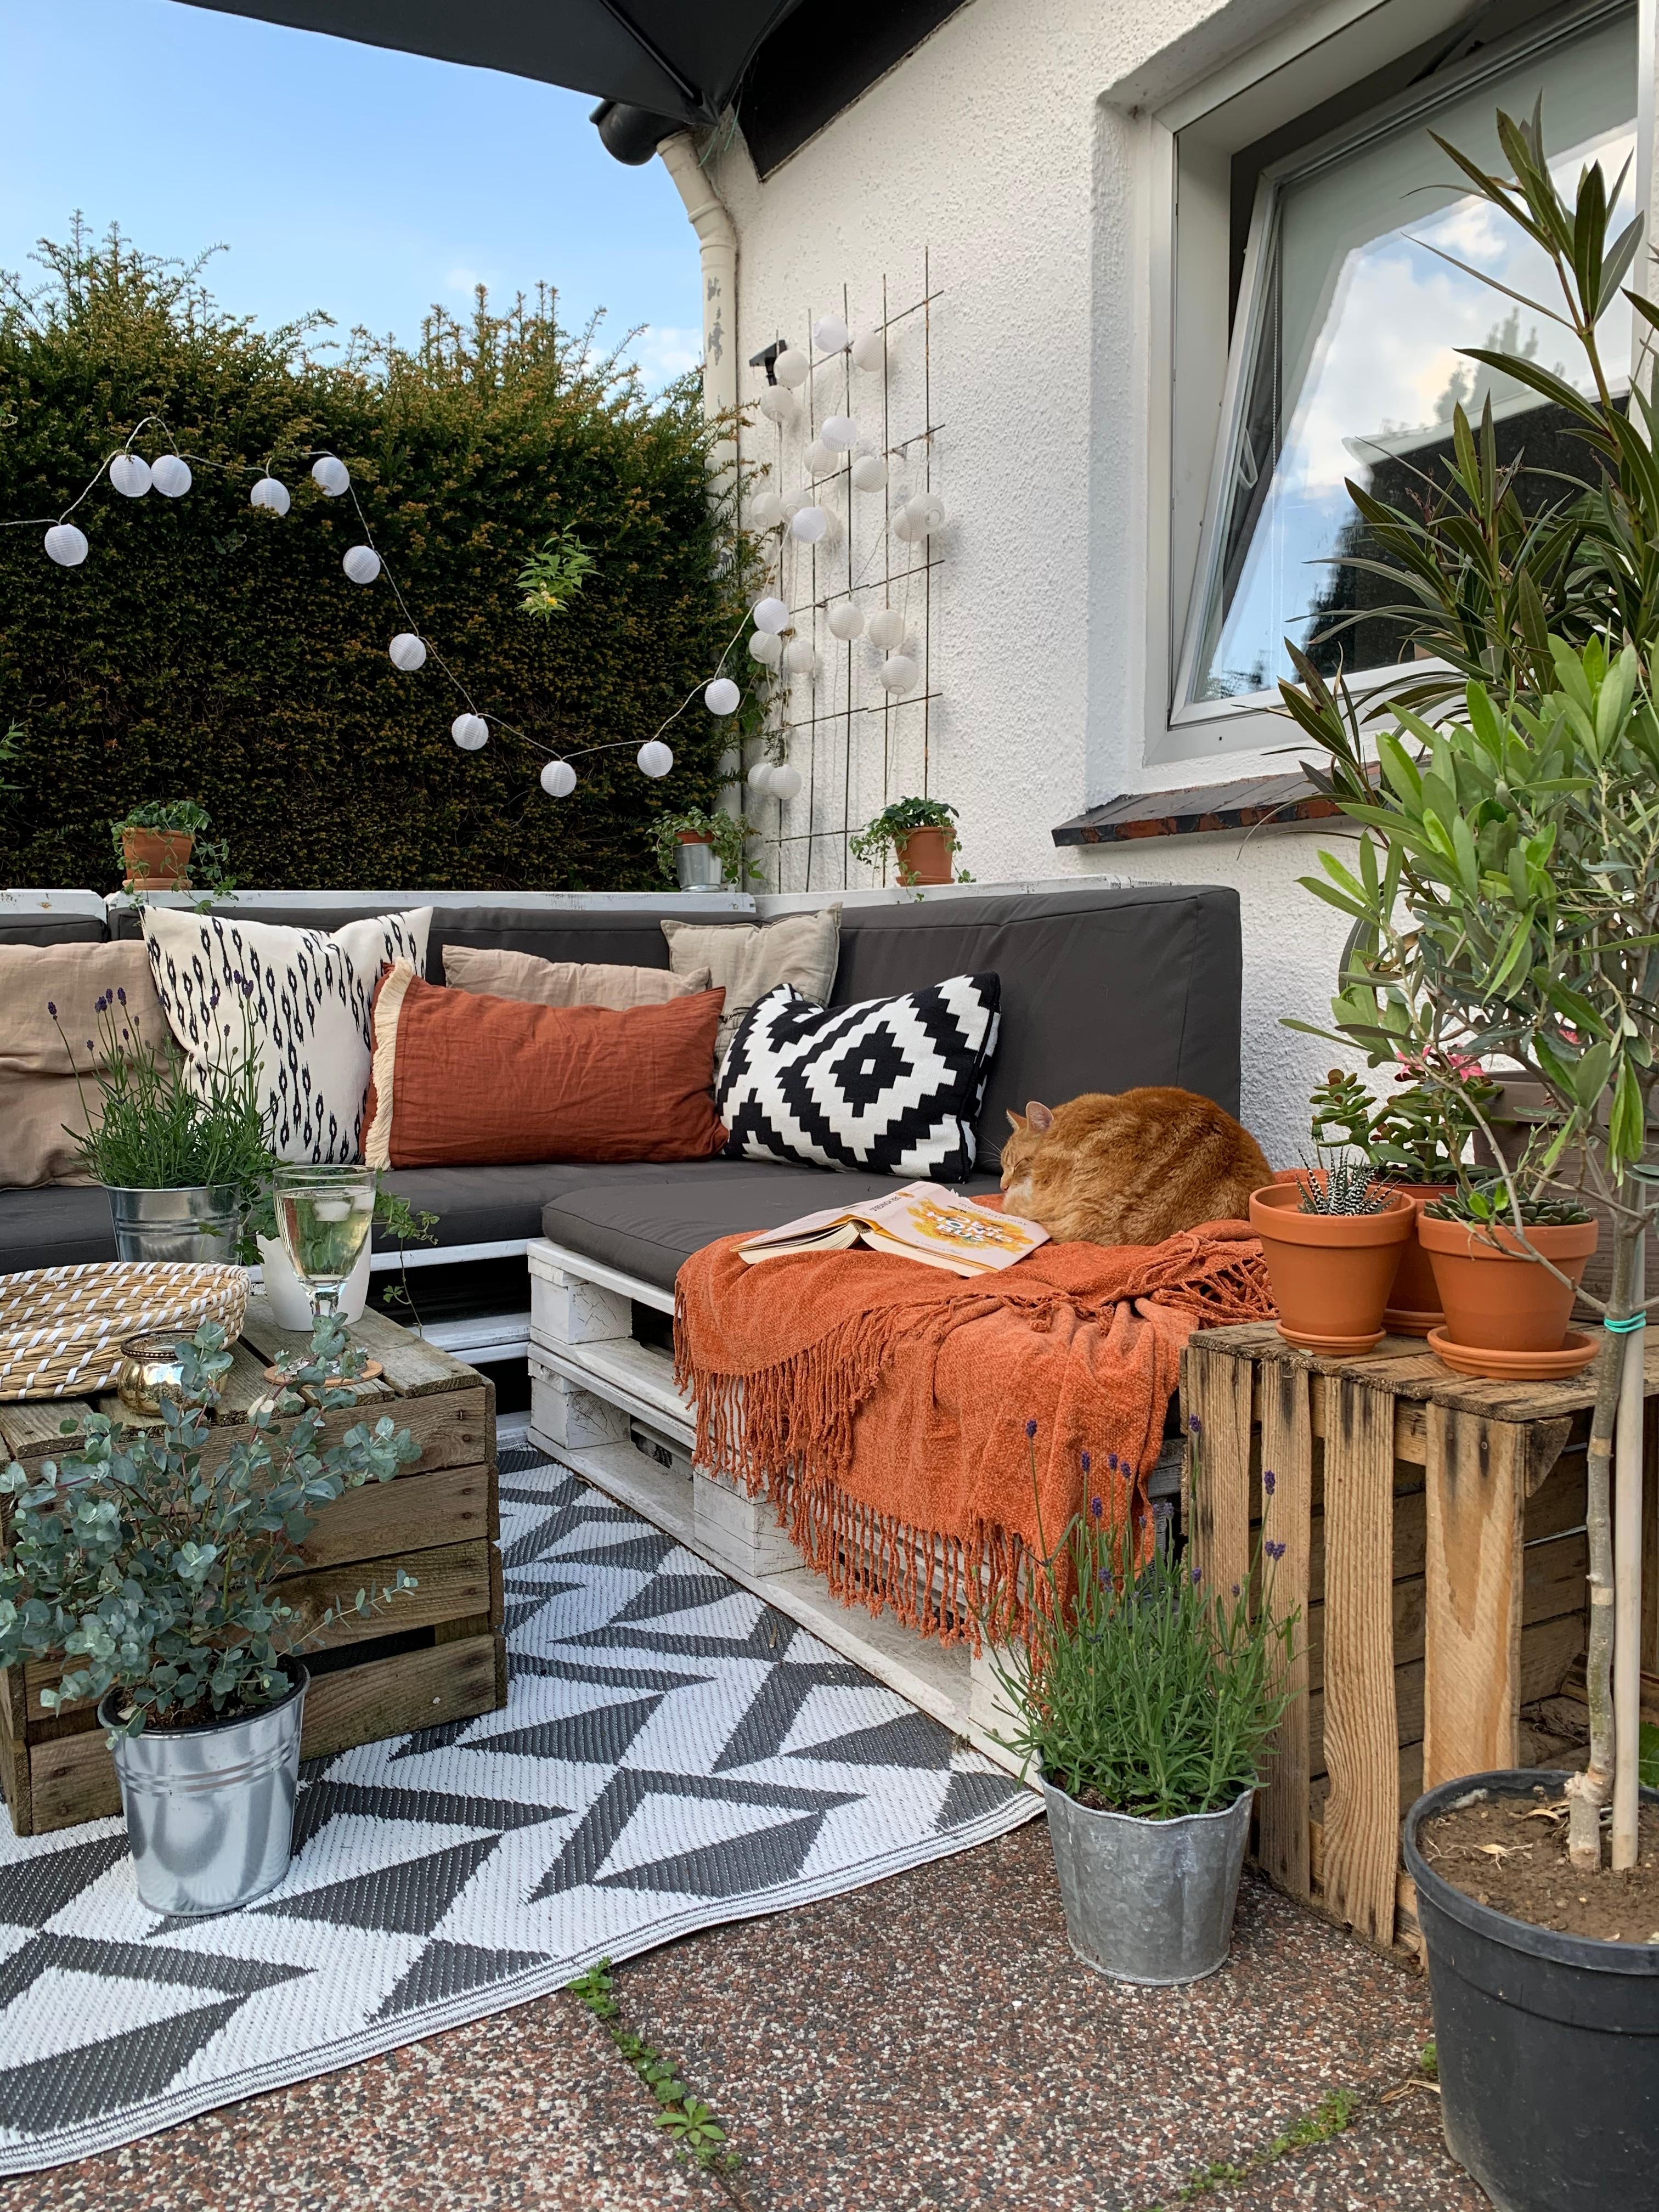 Terrassenglück 🙏

#terrasseninspo #patio #urbanjungle